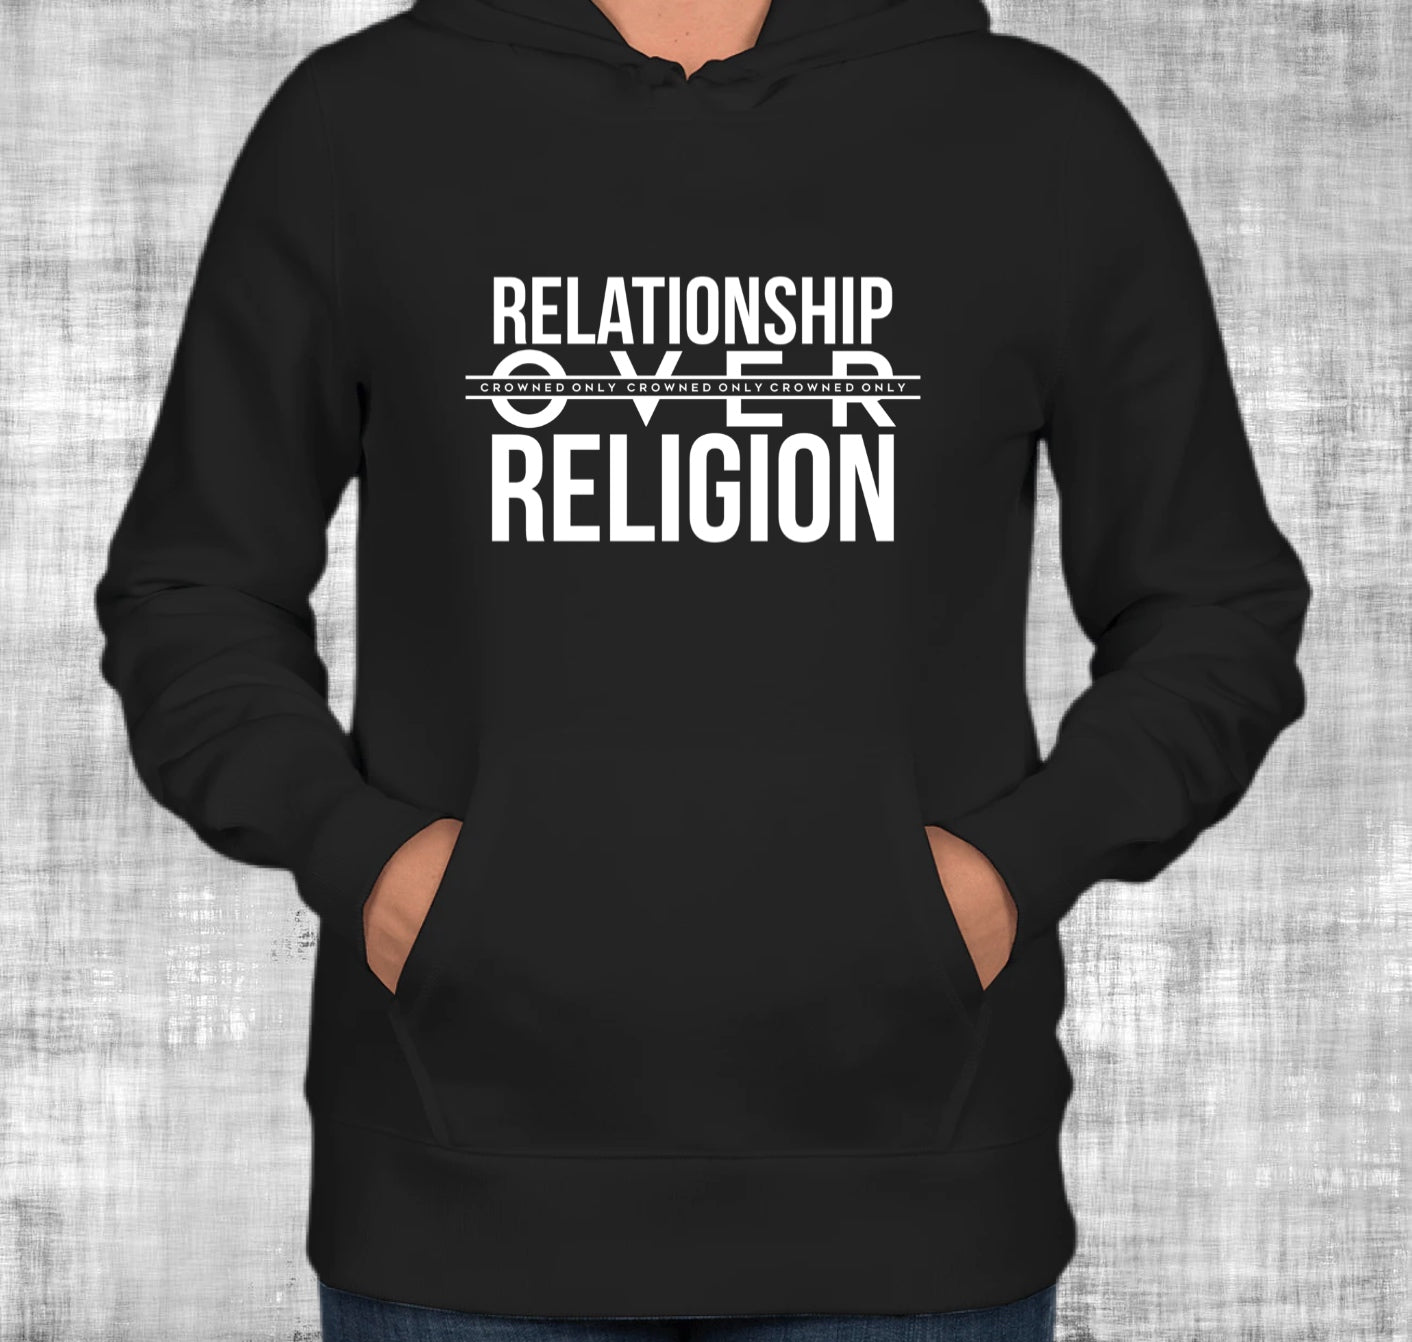 Relationship Over Religion - Women’s Hoody